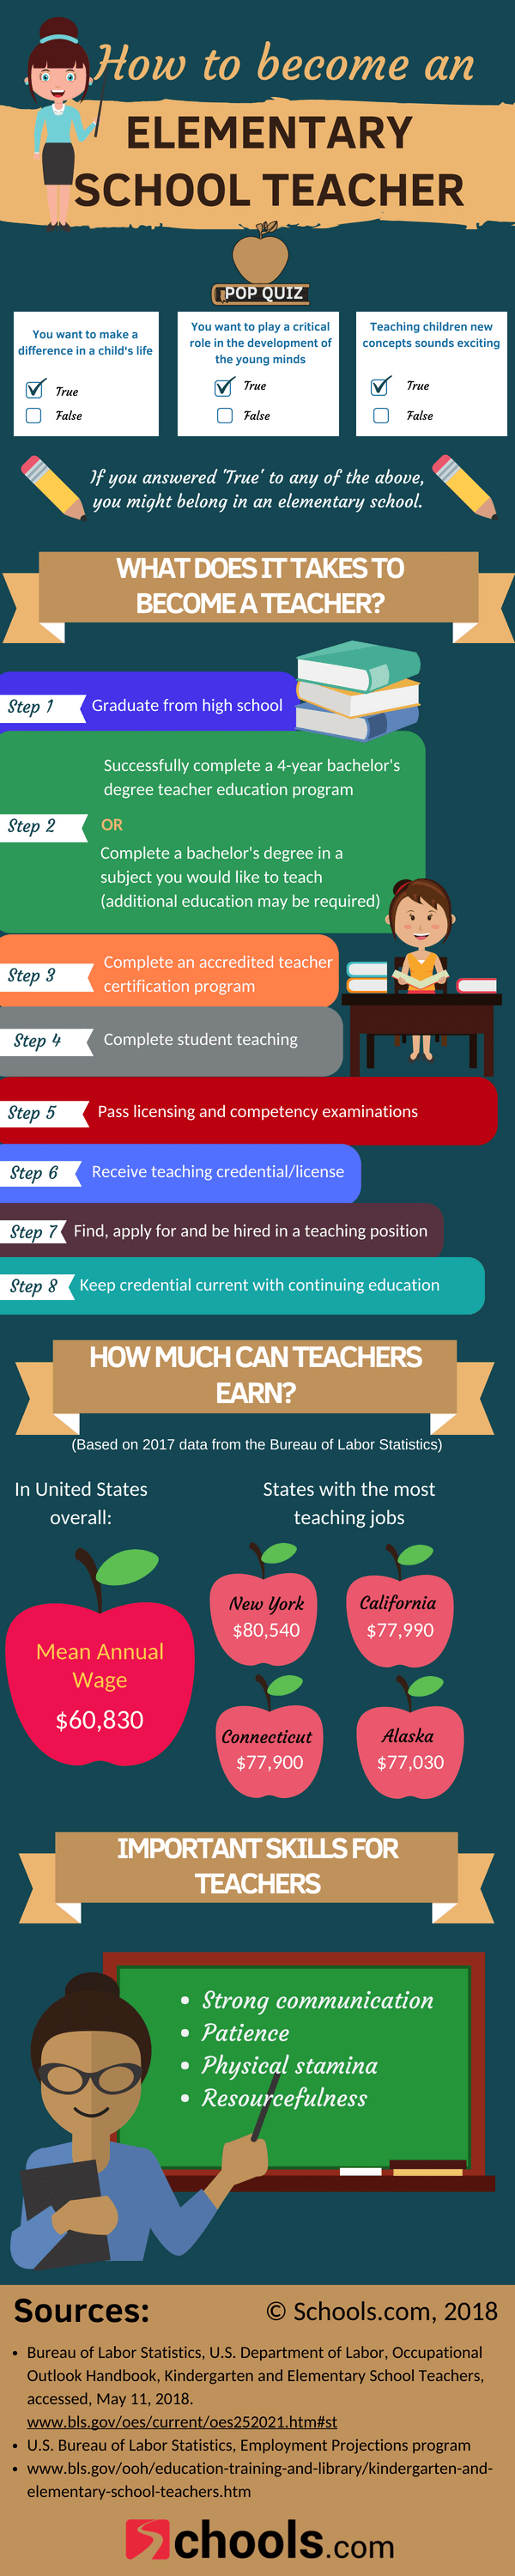 how to become a school teacher